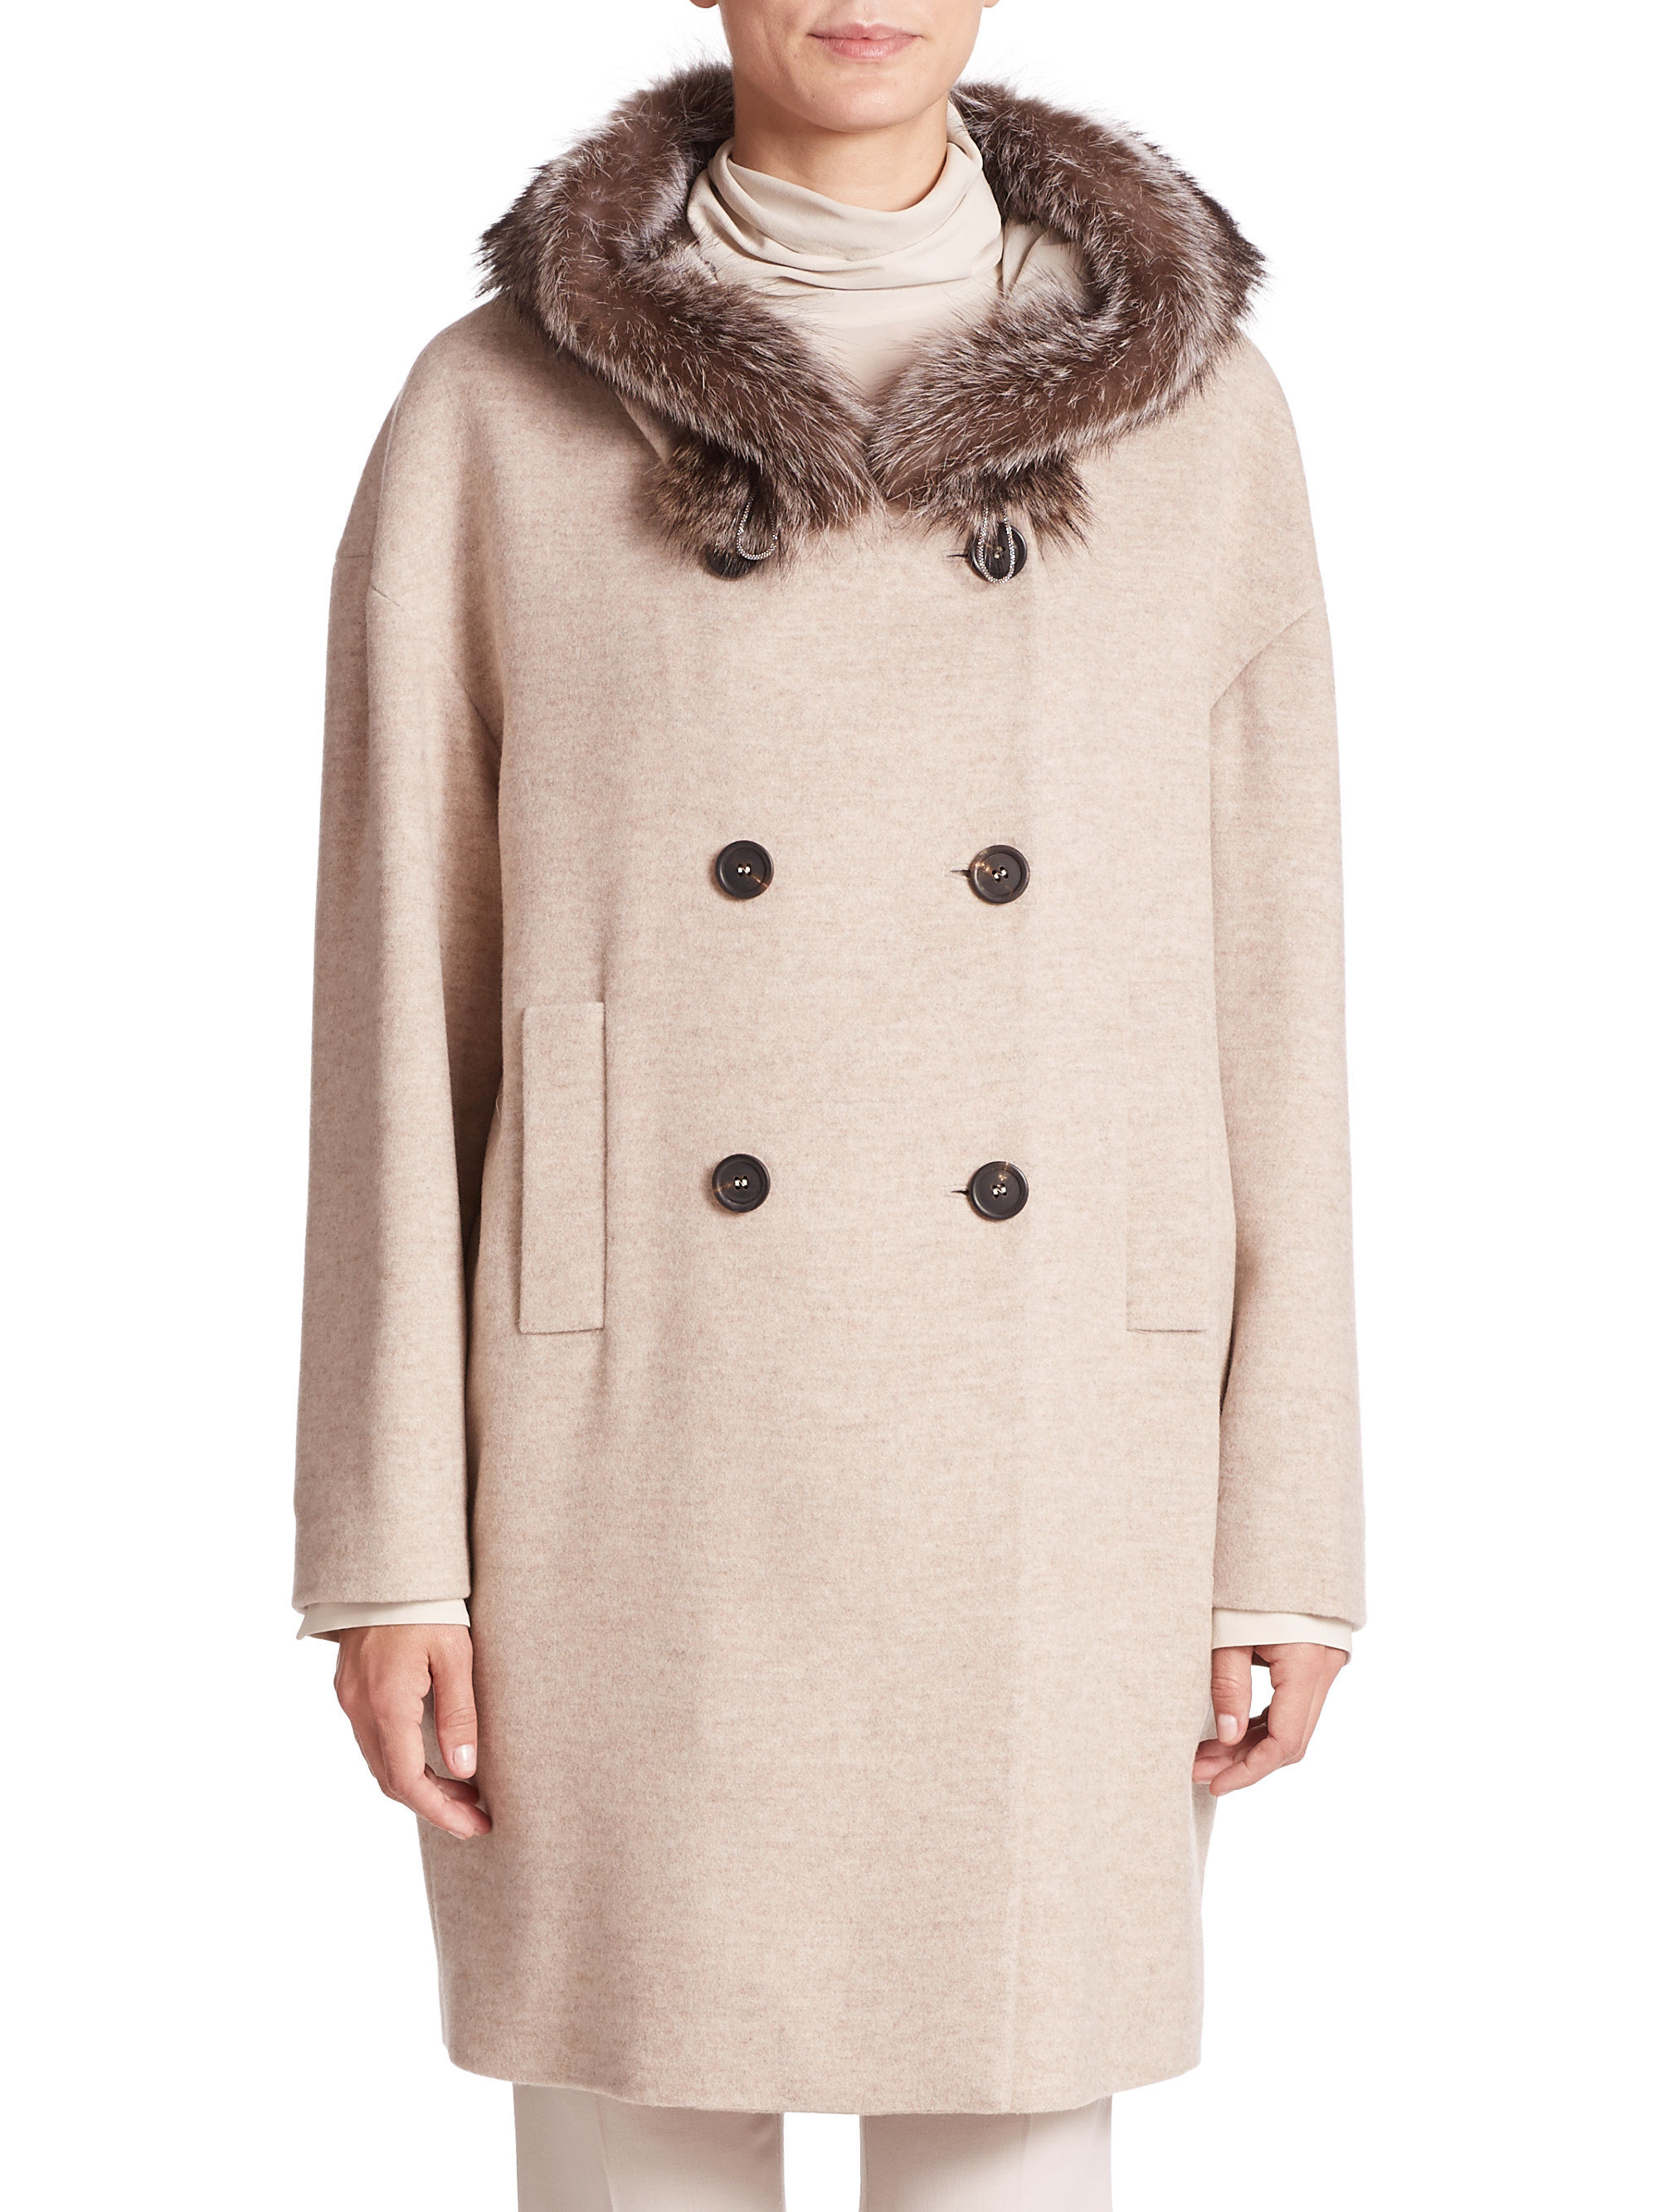 Lyst - Brunello Cucinelli Macro Melange Fur-trimmed Hooded Cashmere Coat in Natural